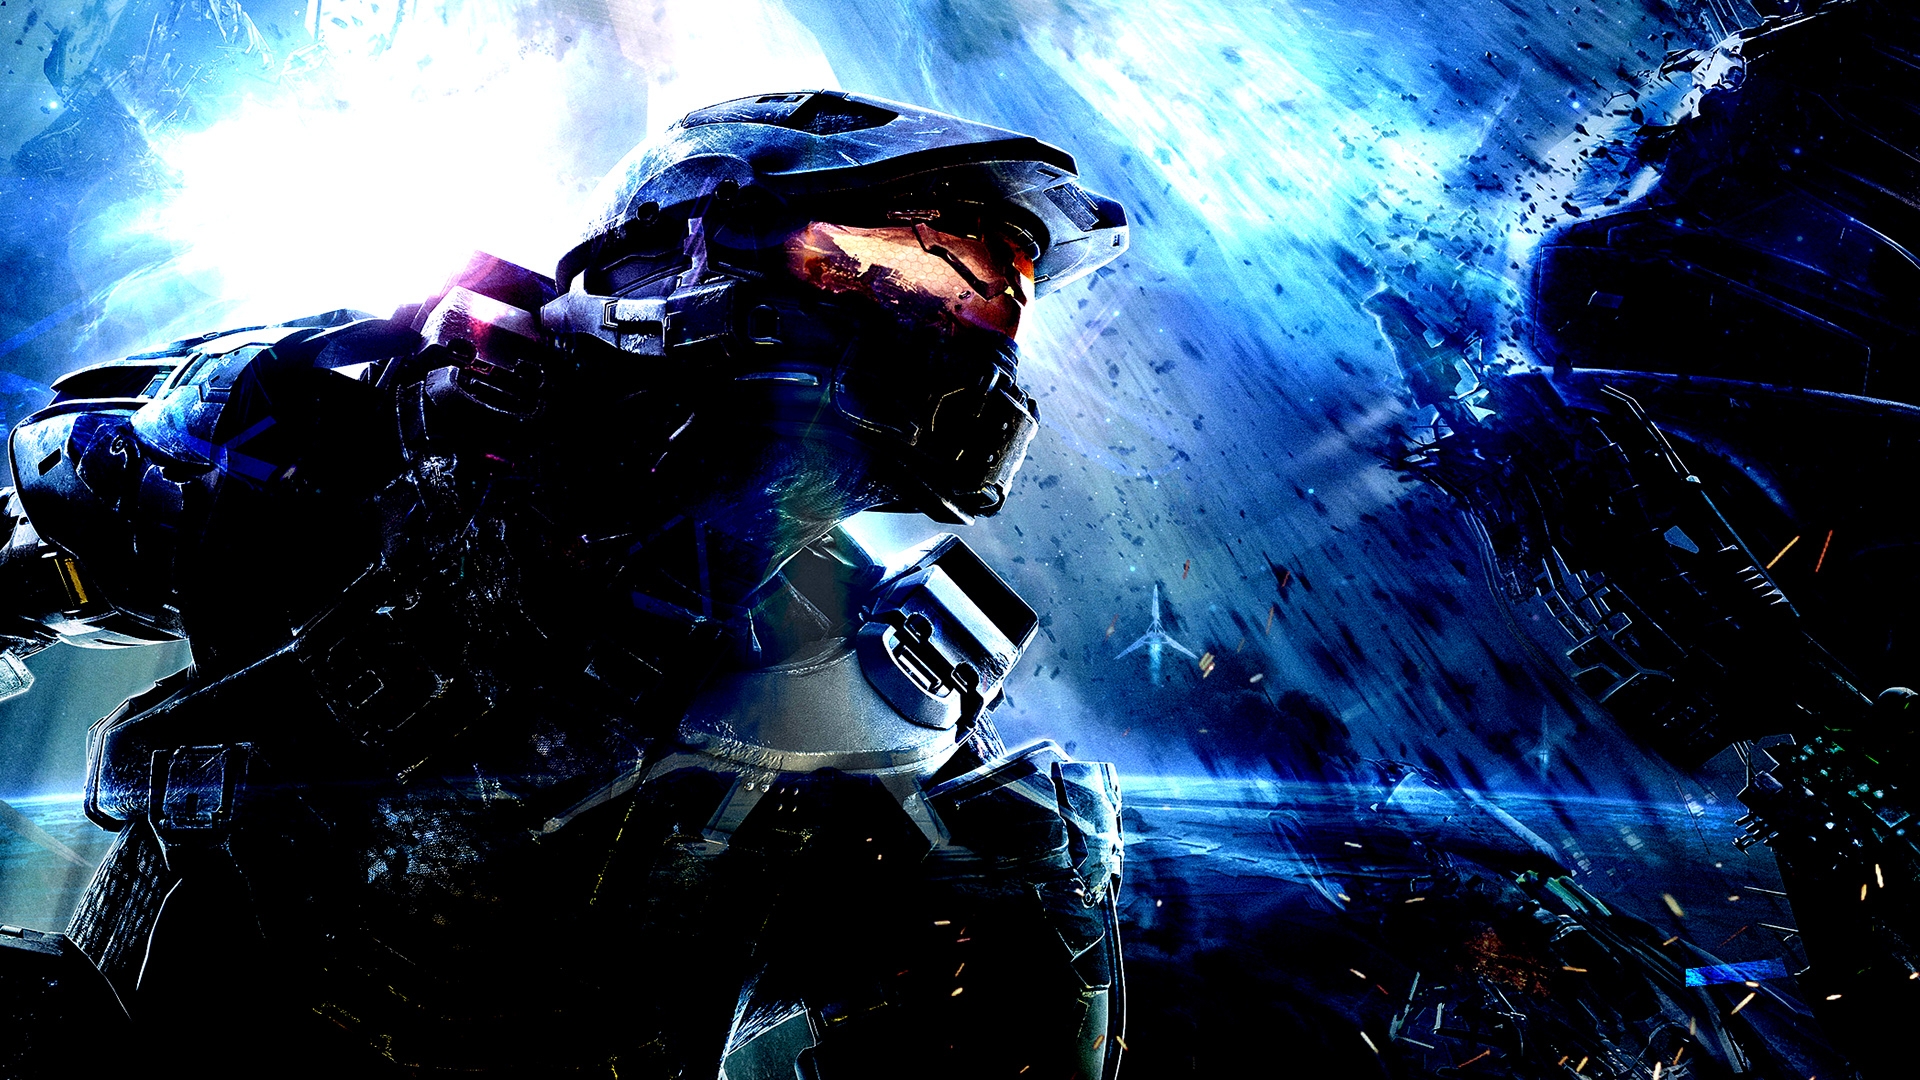 Halo 4 Wallpaper HD Free Download